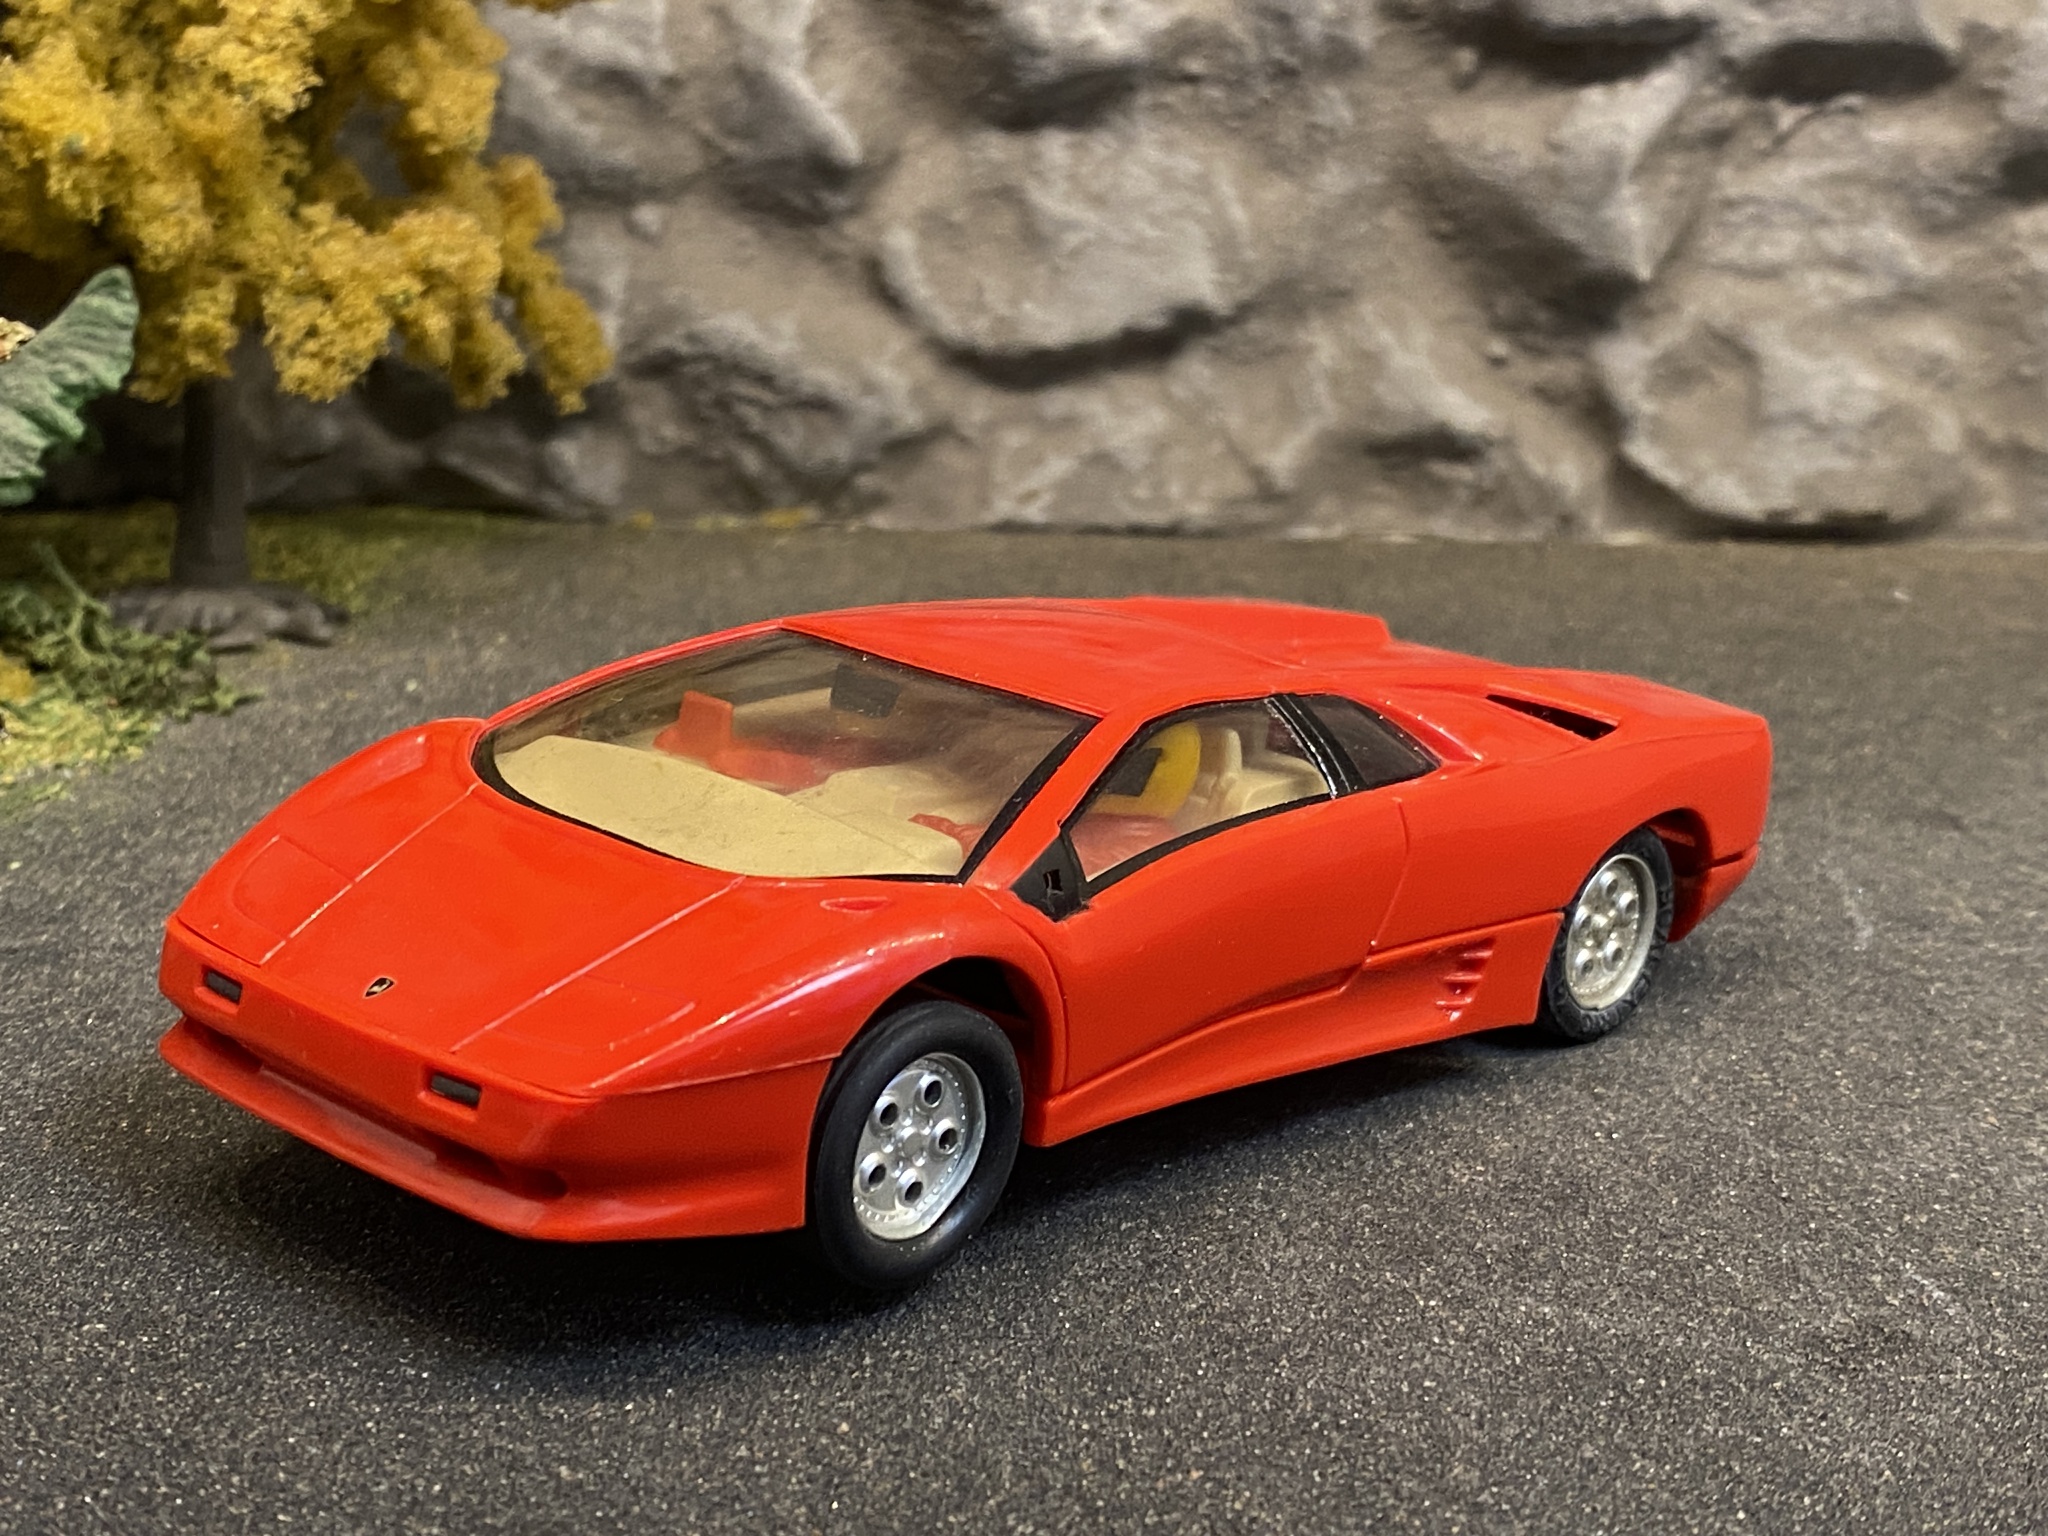 Skala 1/32 Begagnad/Used Analoge slotcar: Lamborghini Diablo, red fr Scalextric